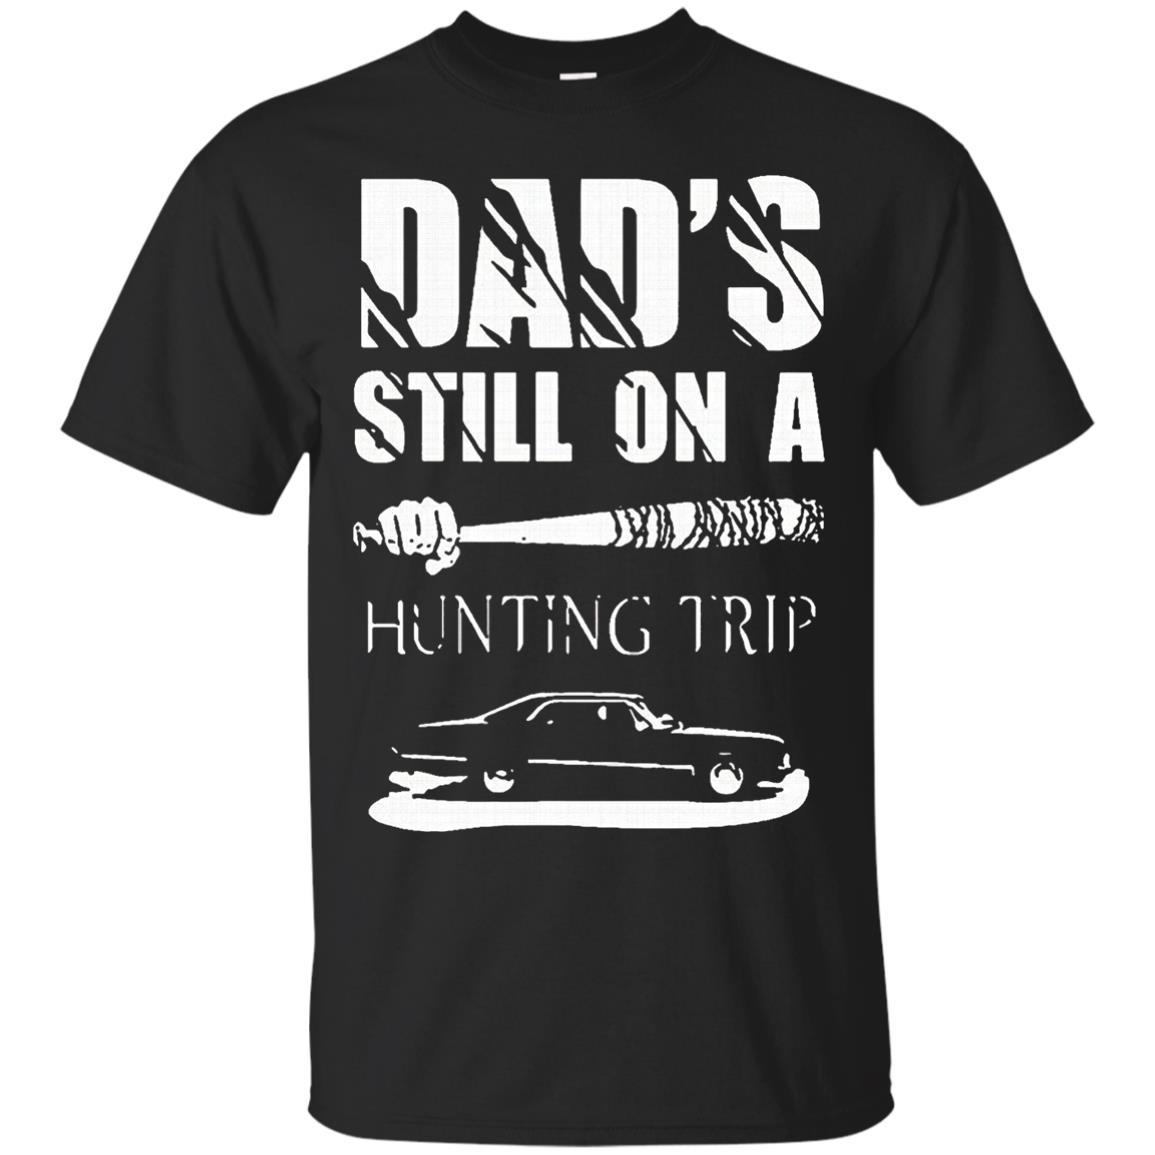 DADS STILL ON HUNTING TRIP T-Shirt